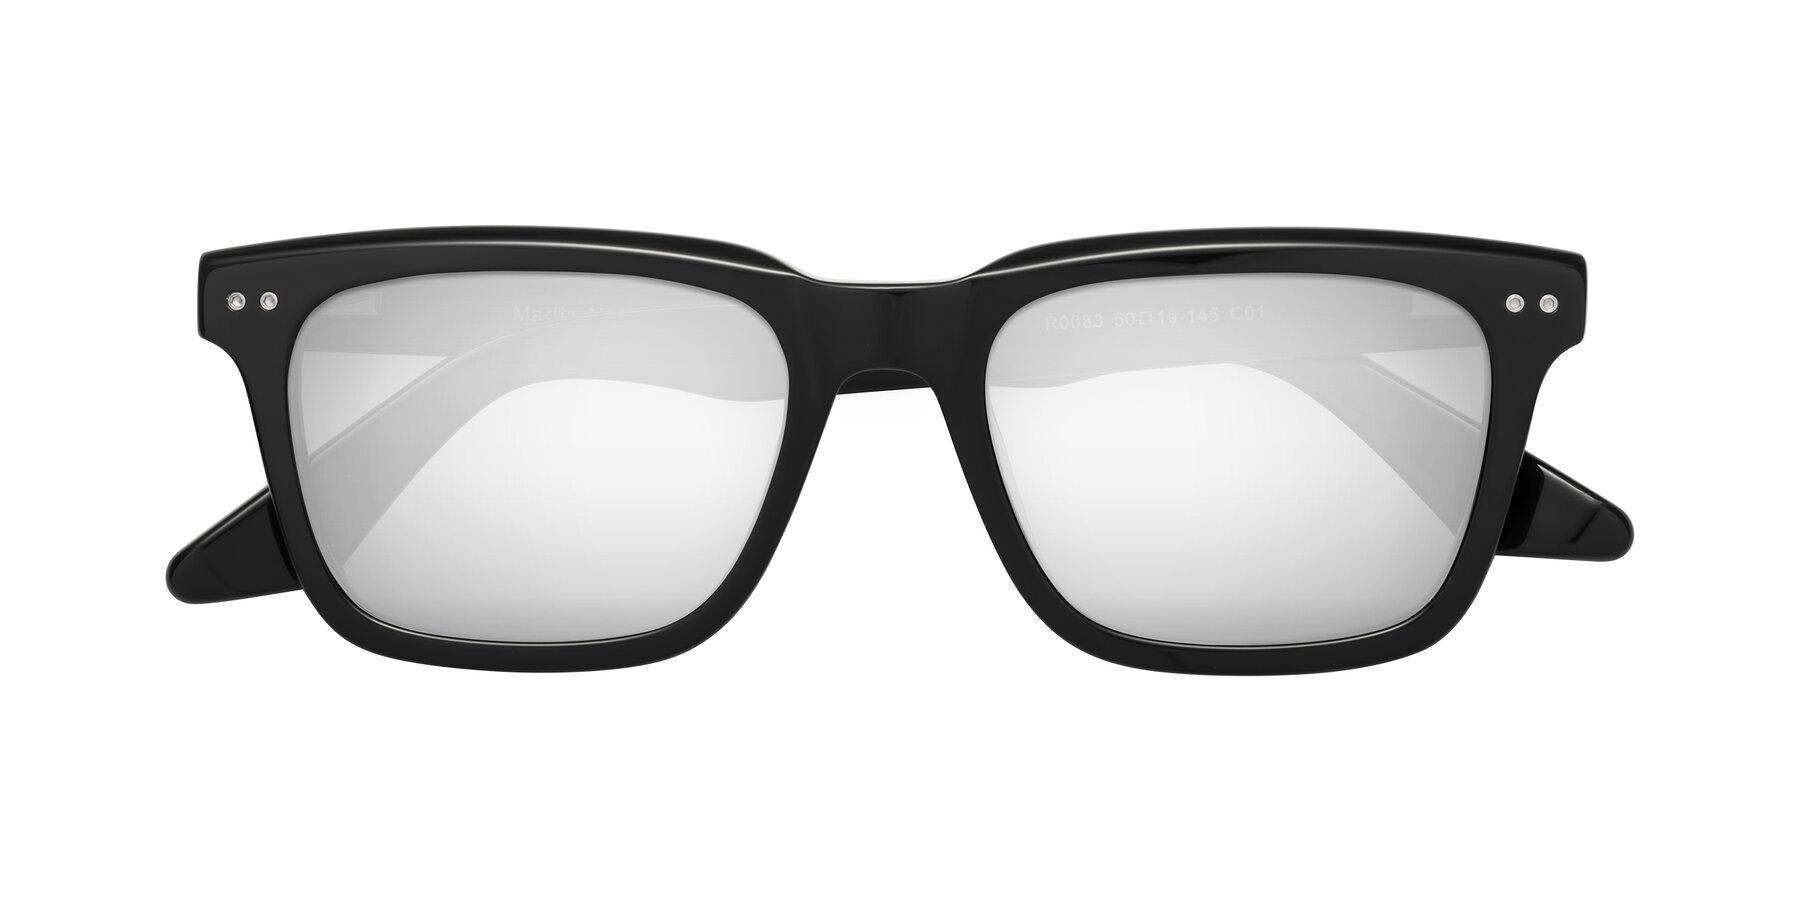 Black Classic with Sunwear - Rectangle Silver Sunglasses Acetate Mirrored Lenses Martia